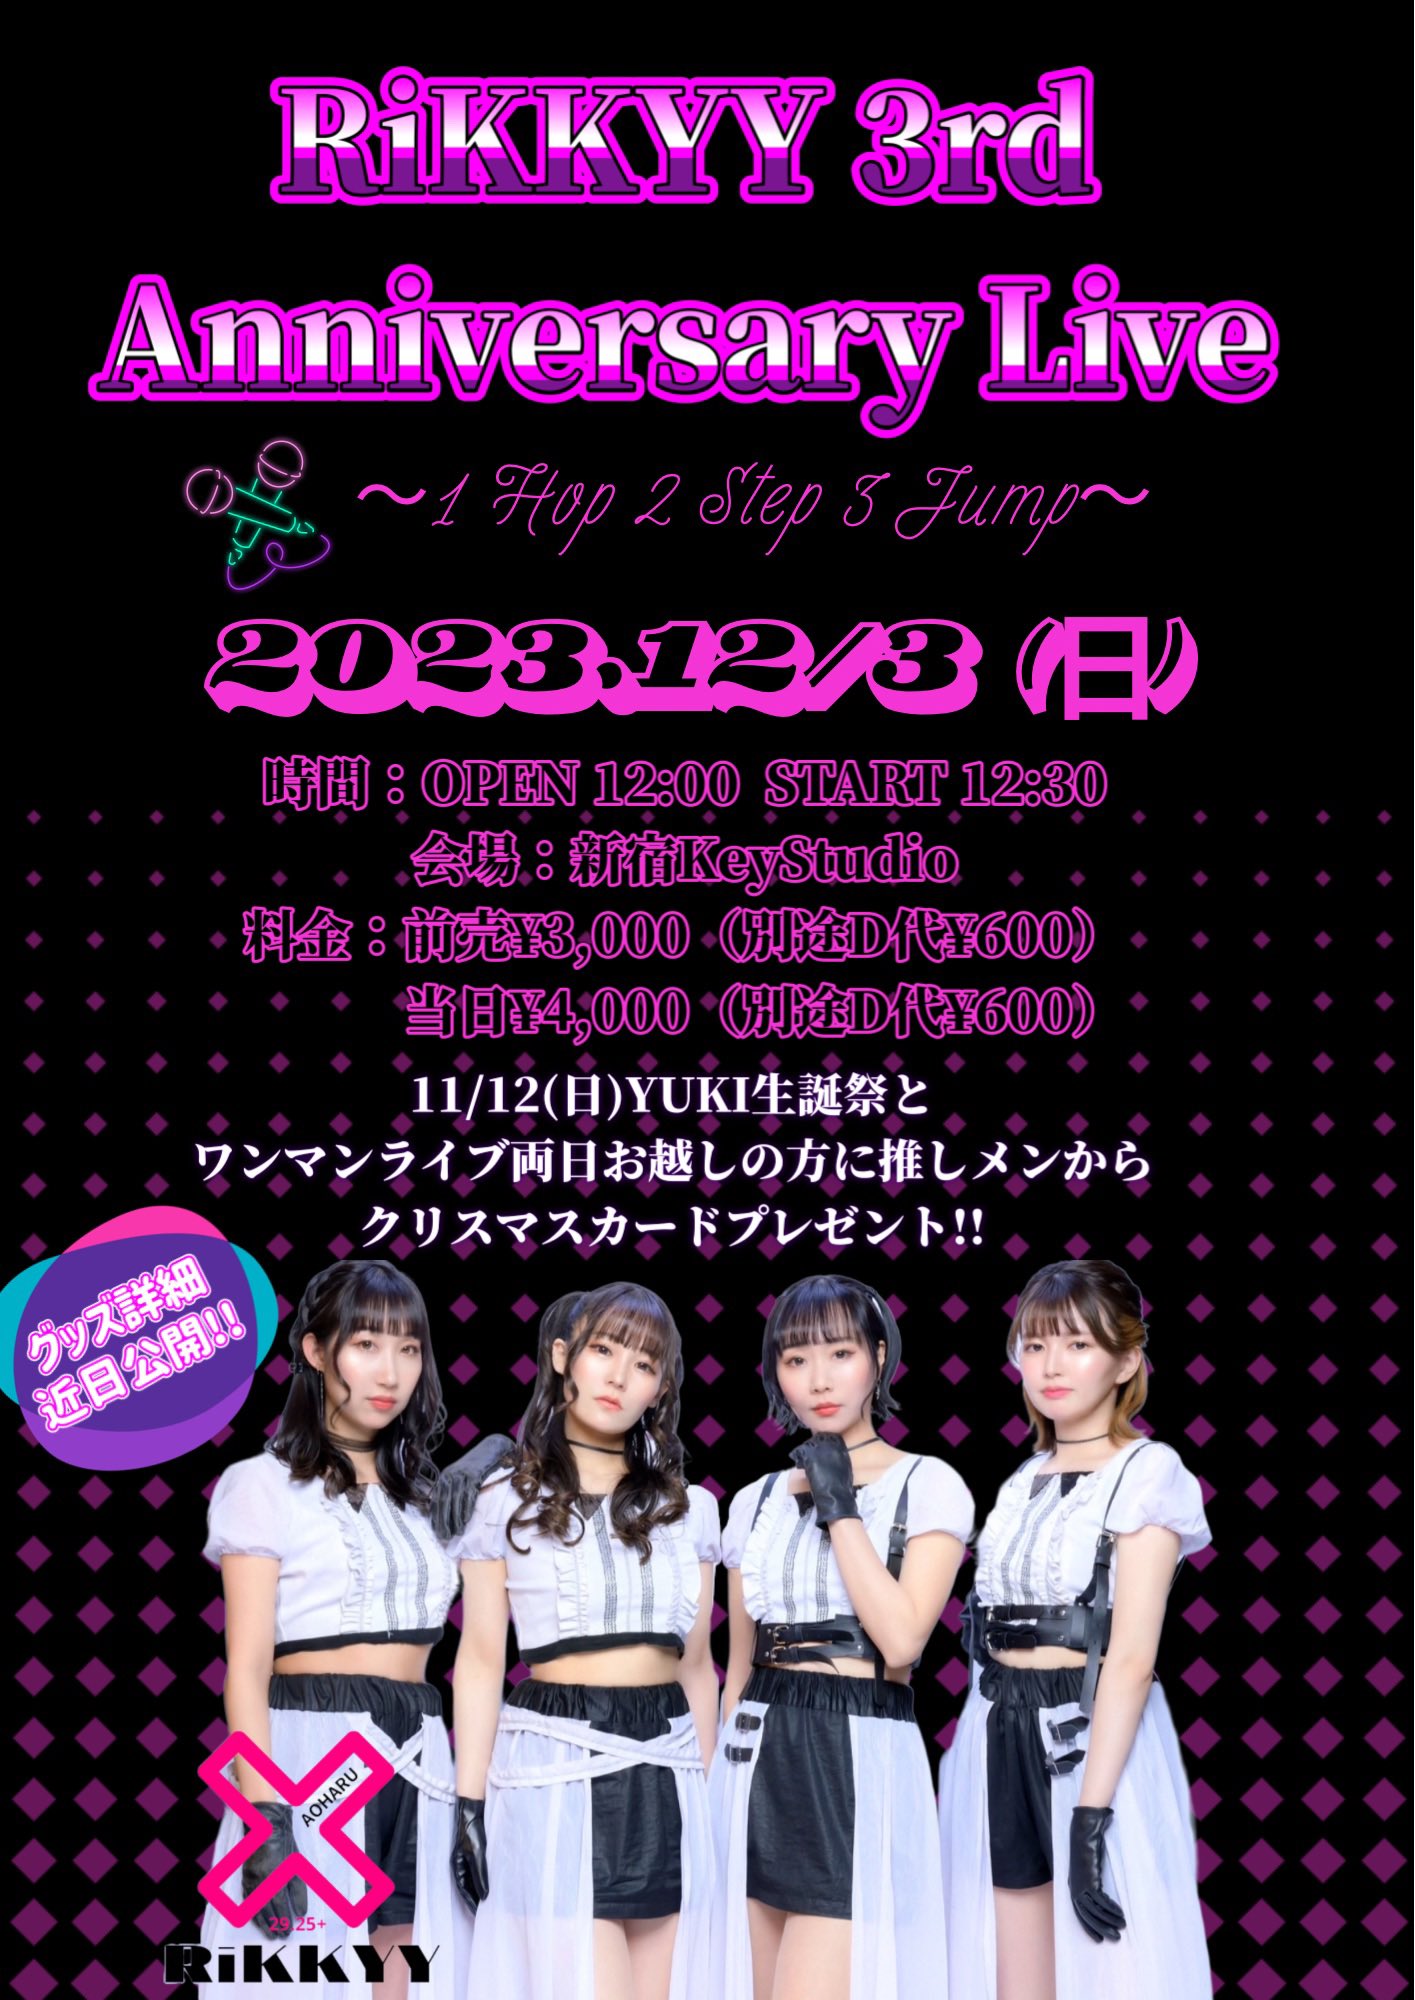 RiKKYY 3rd Anniversary Live